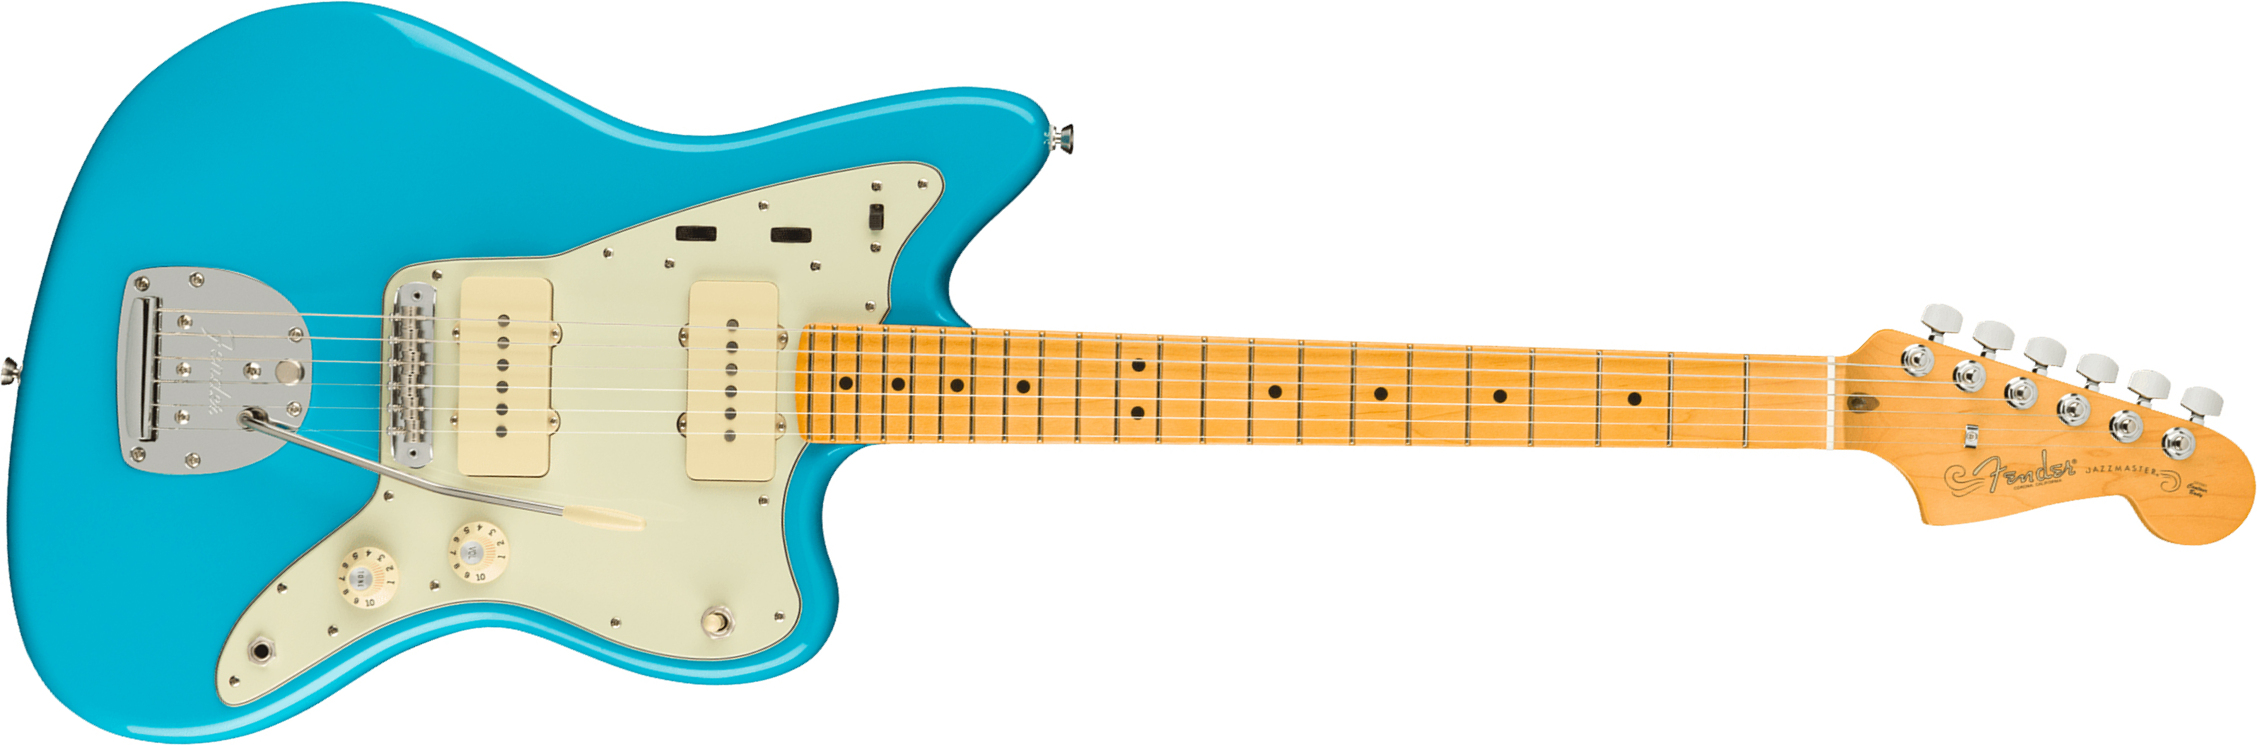 Fender Jazzmaster American Professional Ii Usa Rw - Miami Blue - Retro rock electric guitar - Main picture